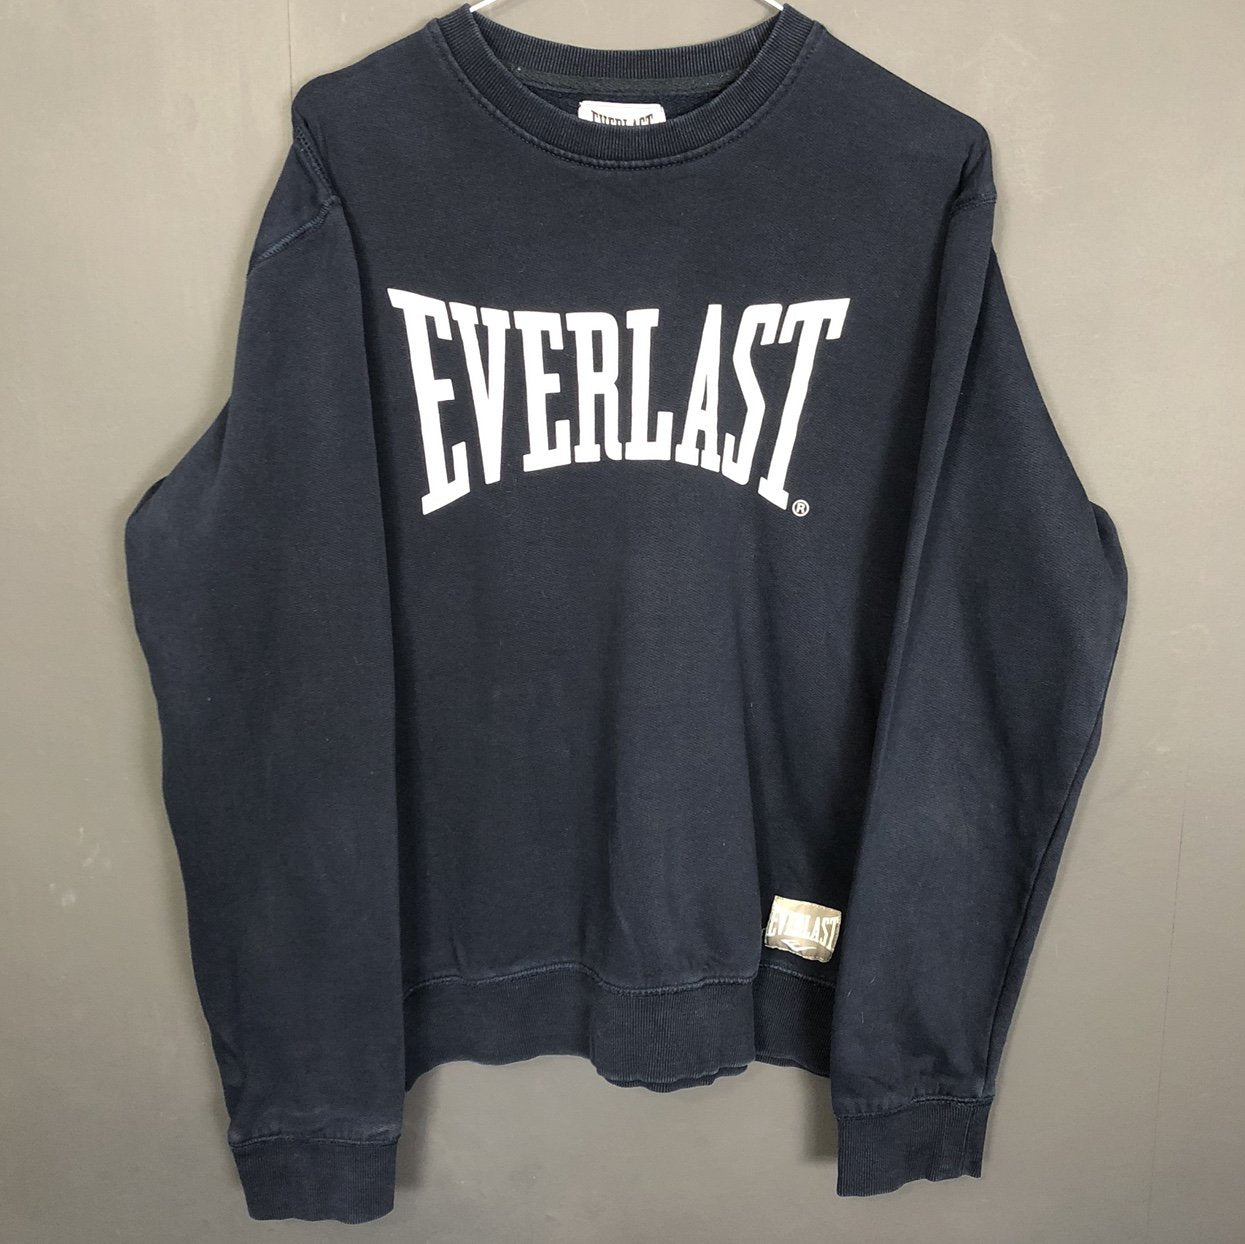 Vintage Everlast Spellout Sweatshirt in Navy - Medium - Vintique Clothing